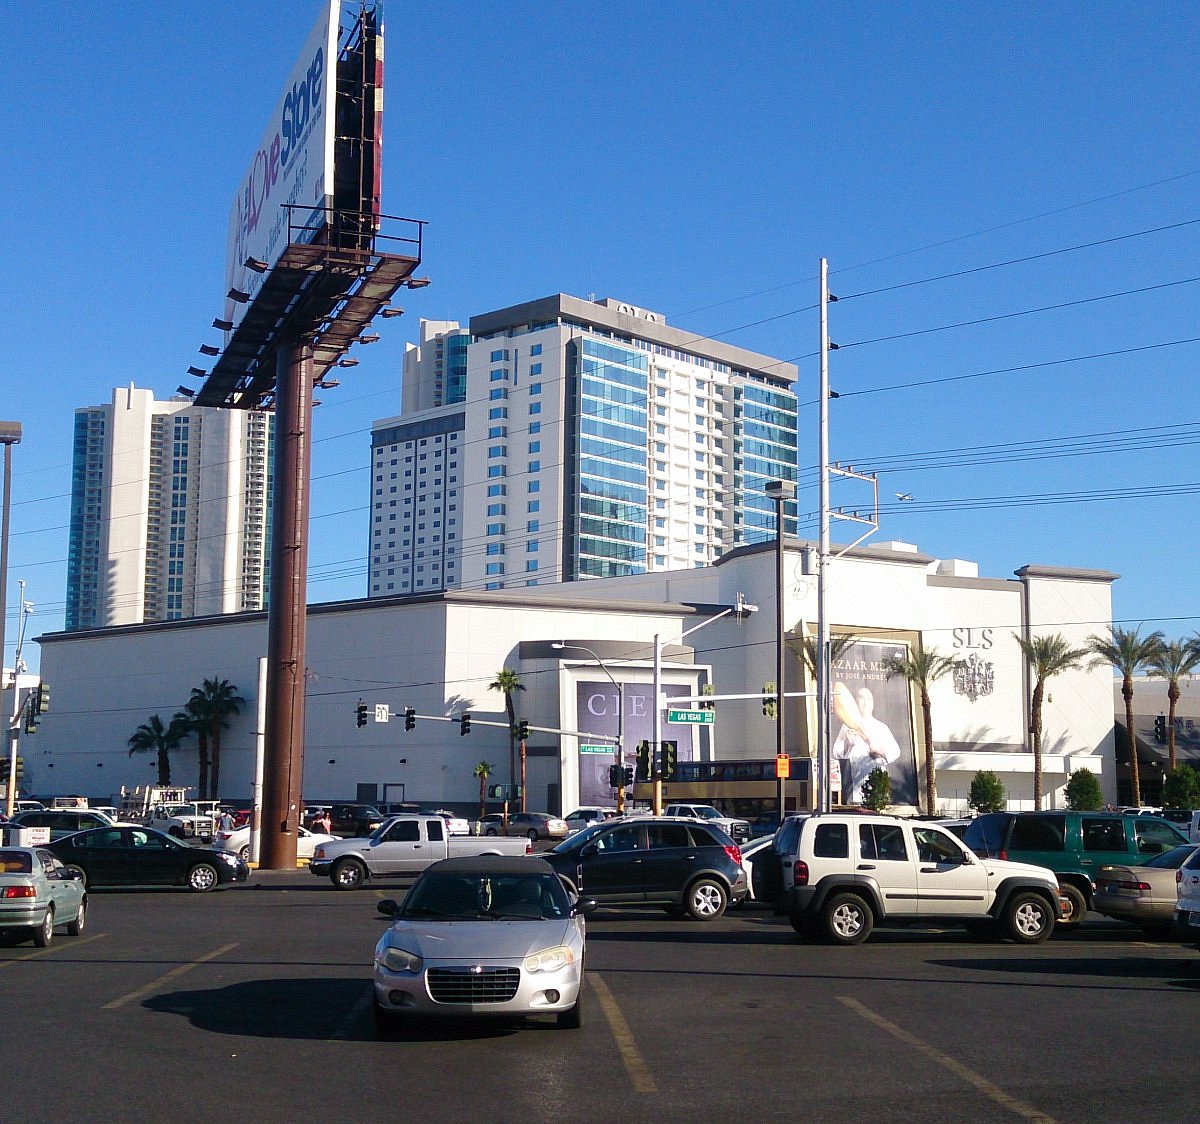 Vintage Las Vegas Dunes Hotel & Casino Key iPhone Case for Sale